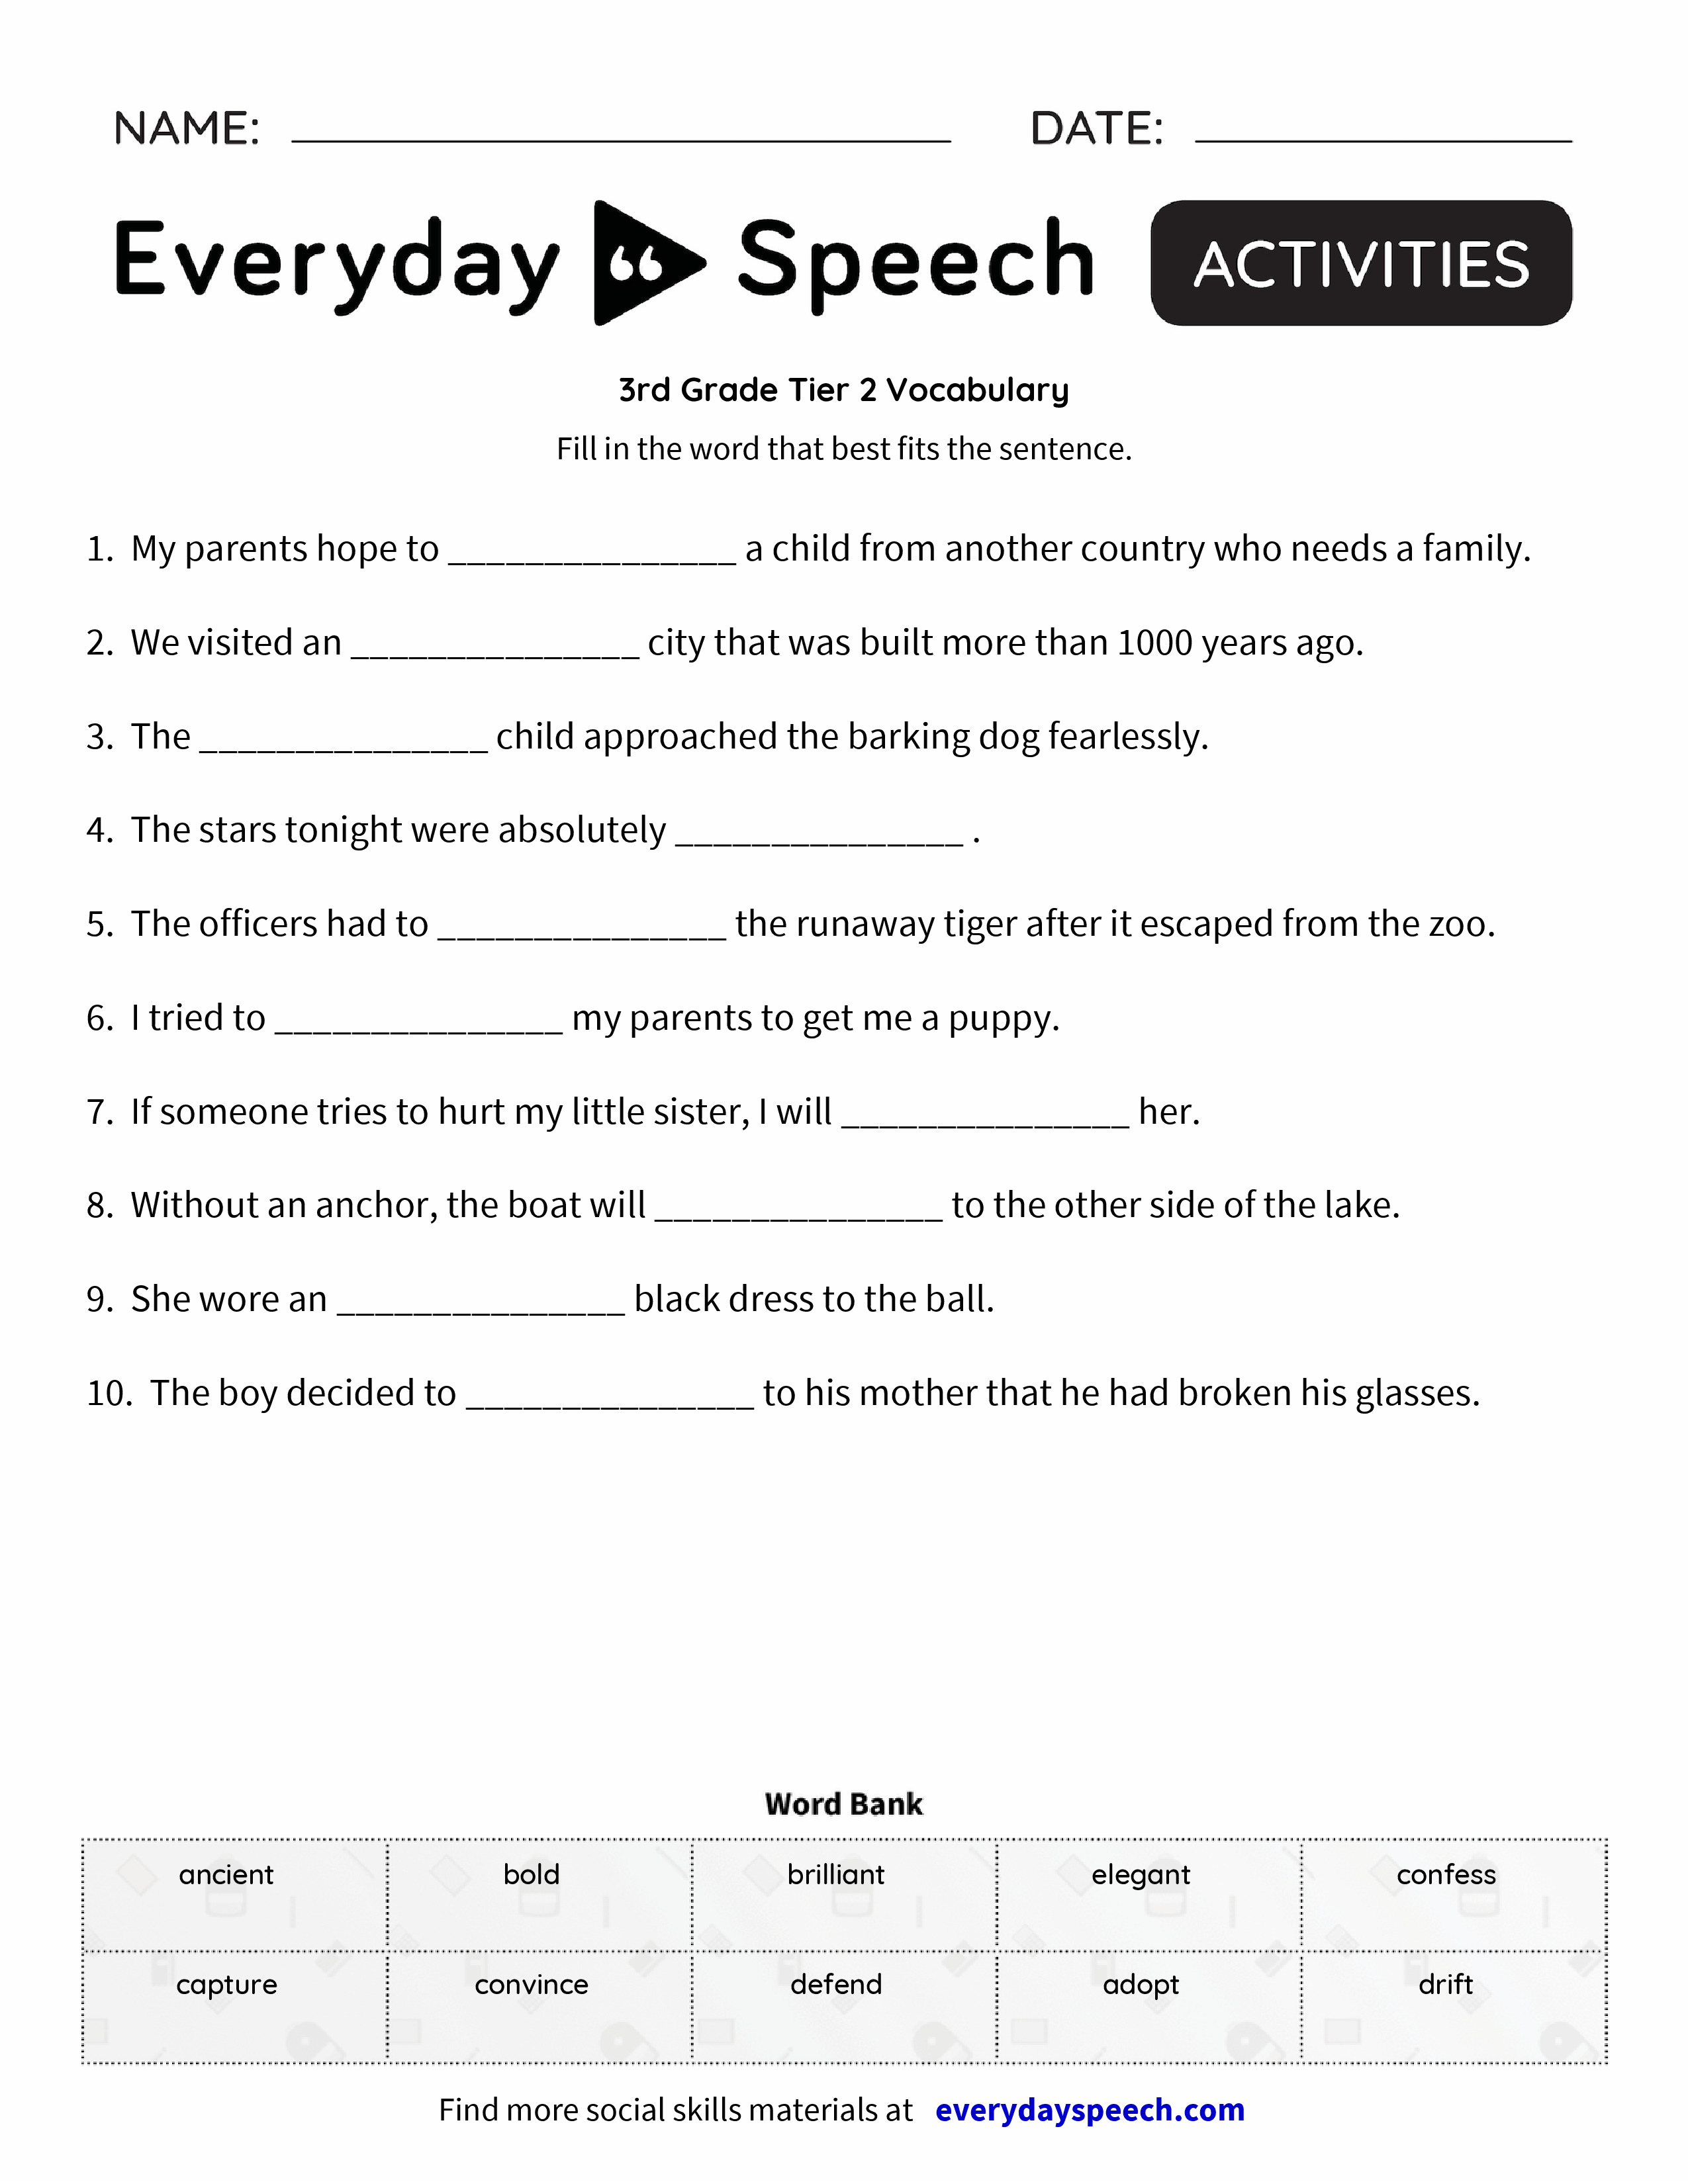 3rd grade tier 2 vocabulary fill in the blank worksheet